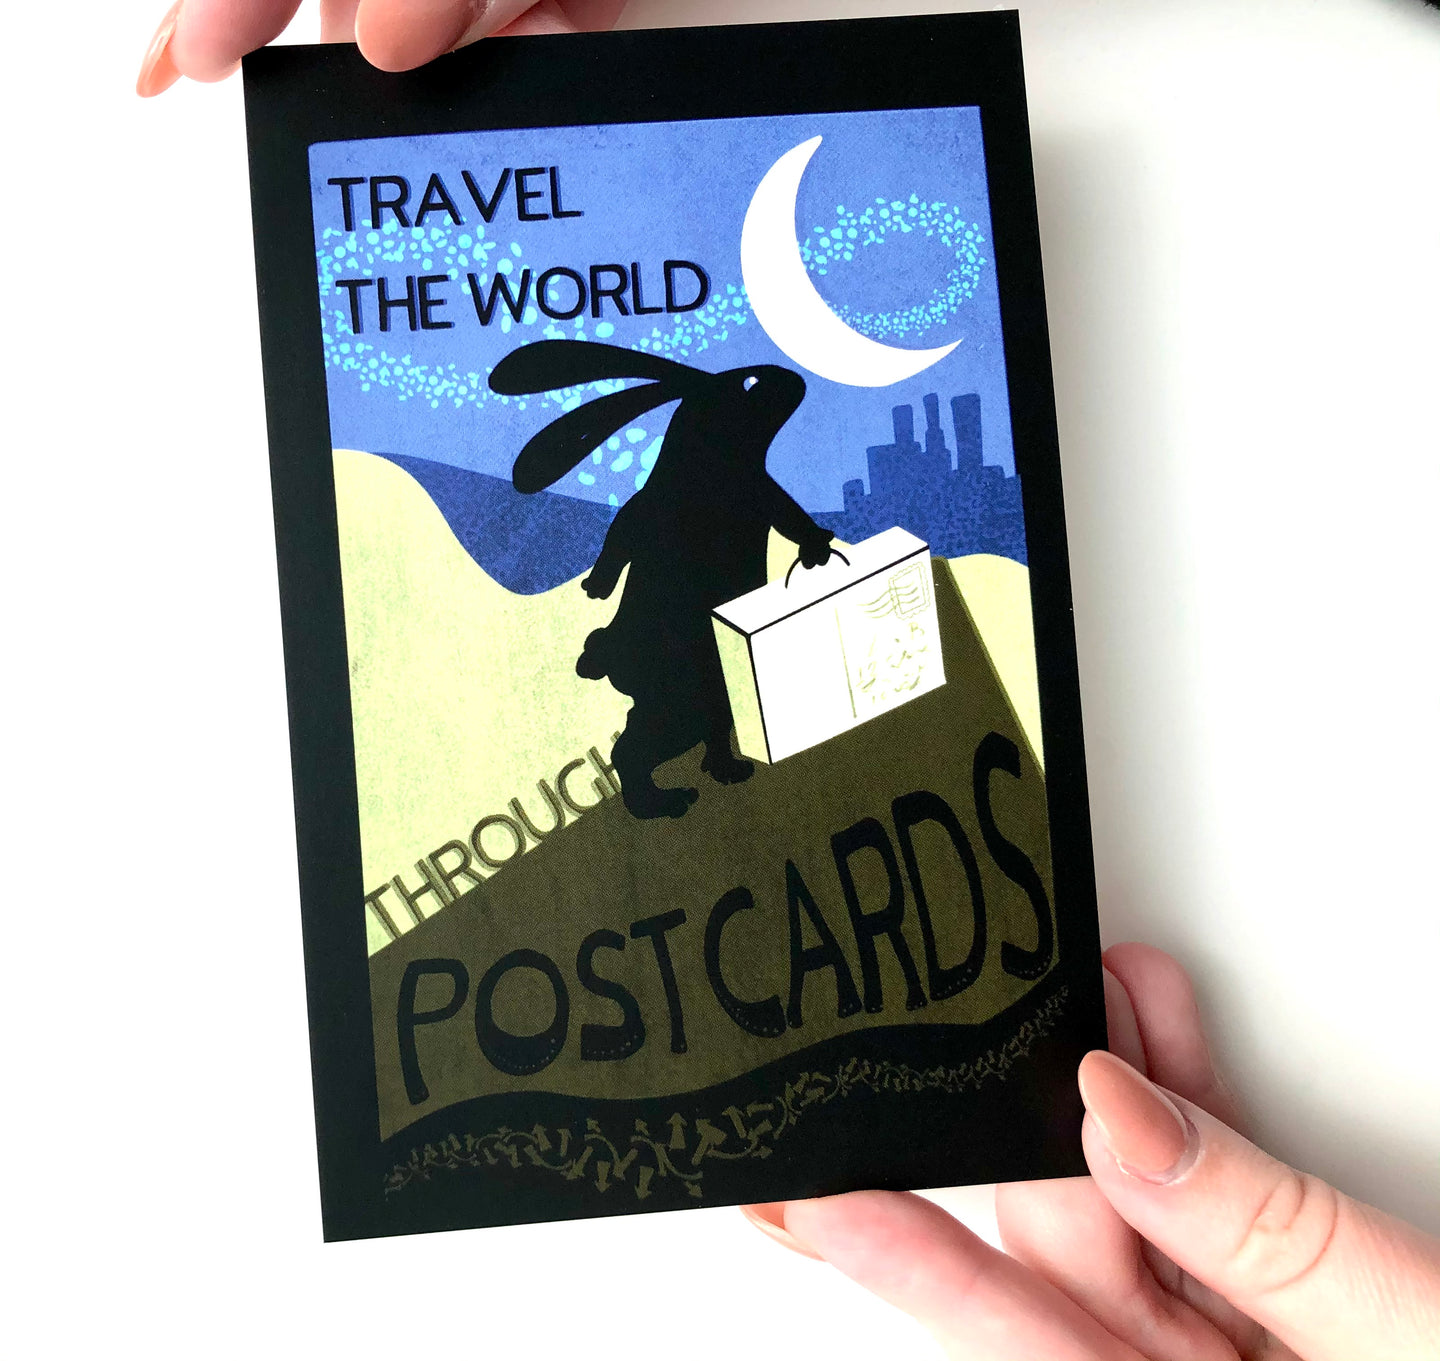 Travel the World through Postcards